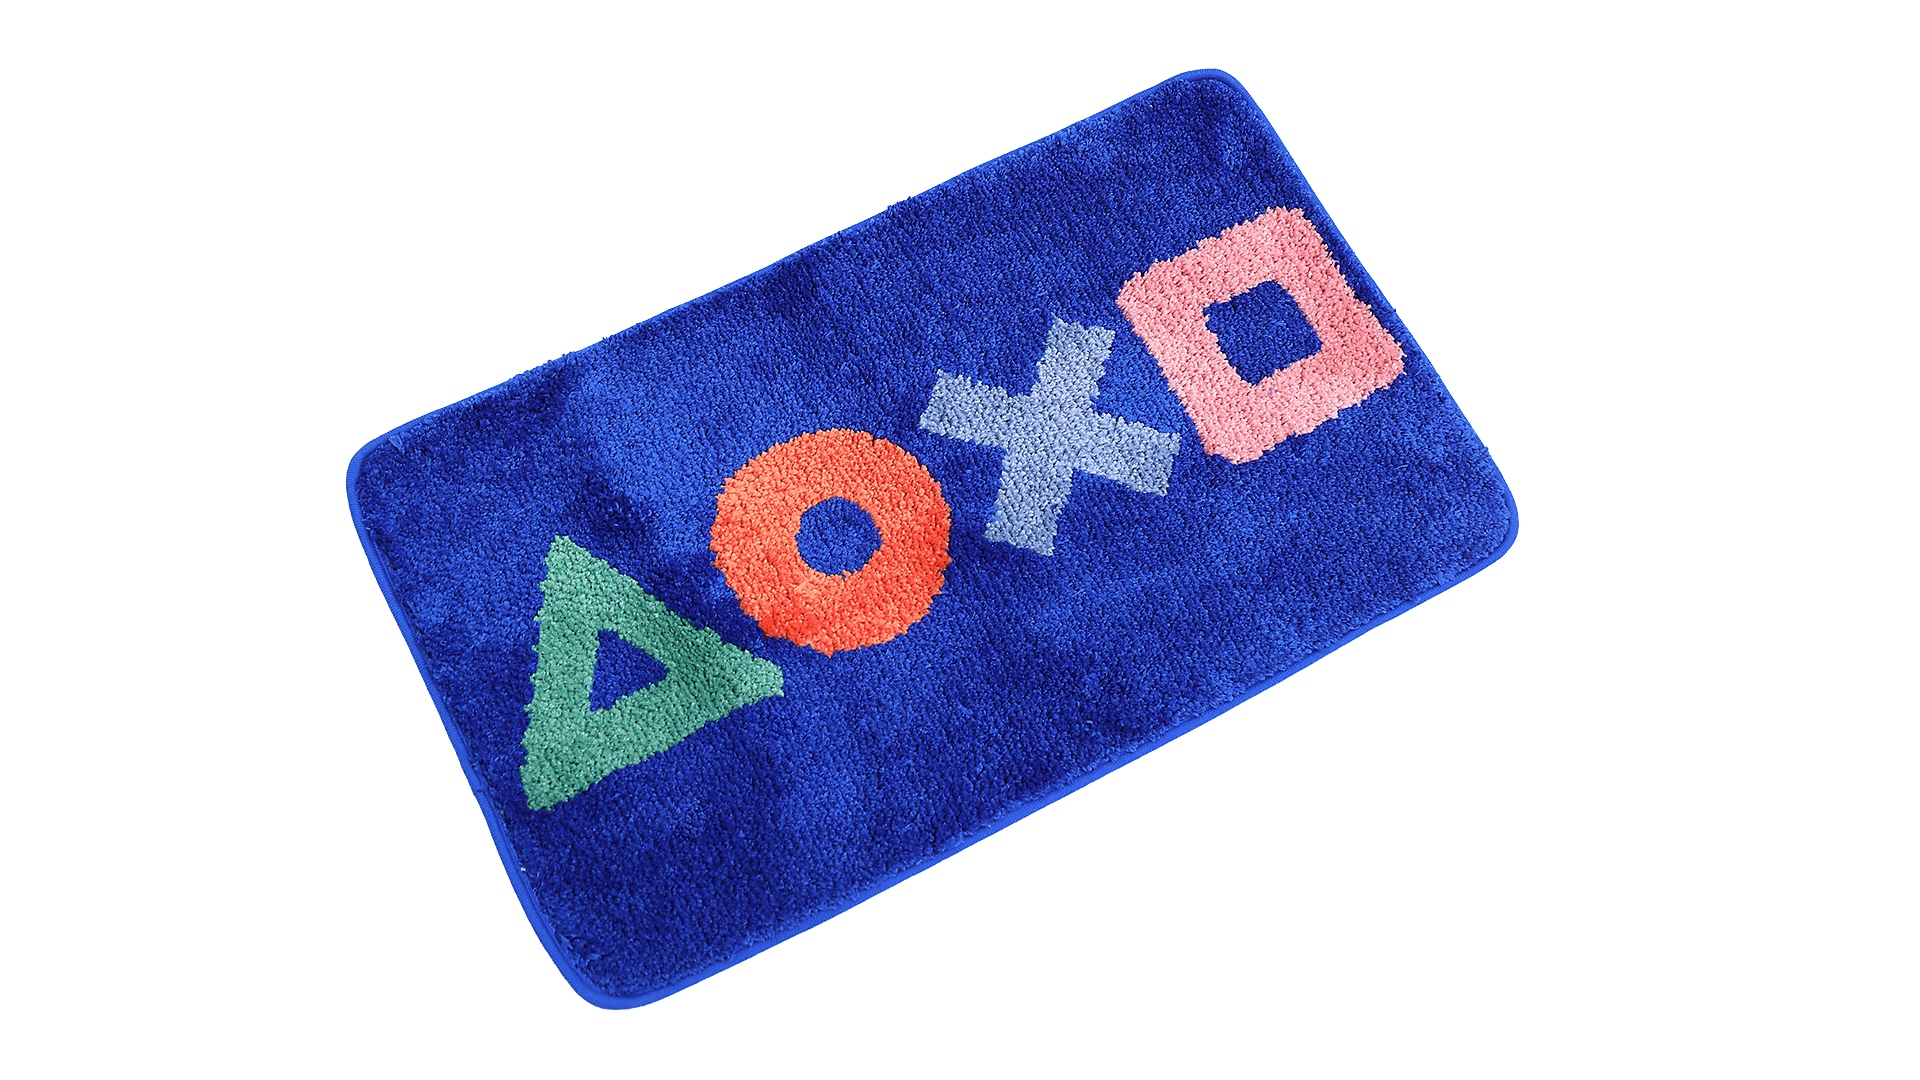 Doormat for PlayStation Gallery Image 2